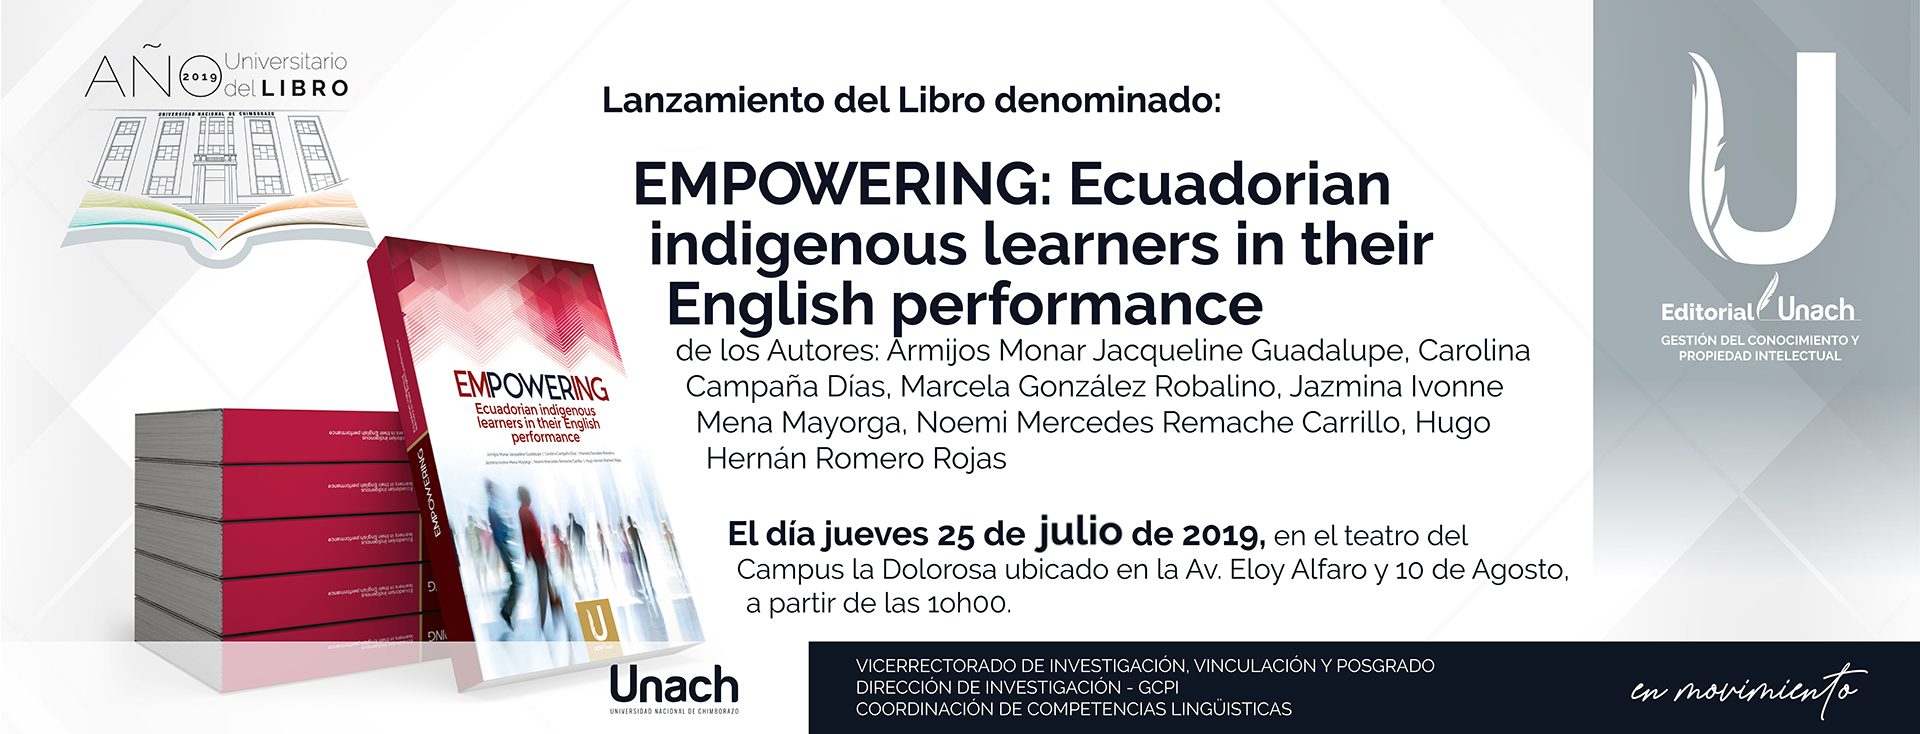 LANZAMIENTO DEL LIBRO: EMPOWERING ECUADORIAN INDIGENOUS LEARNERS IN THEIR ENGLISH PERFORMANCE